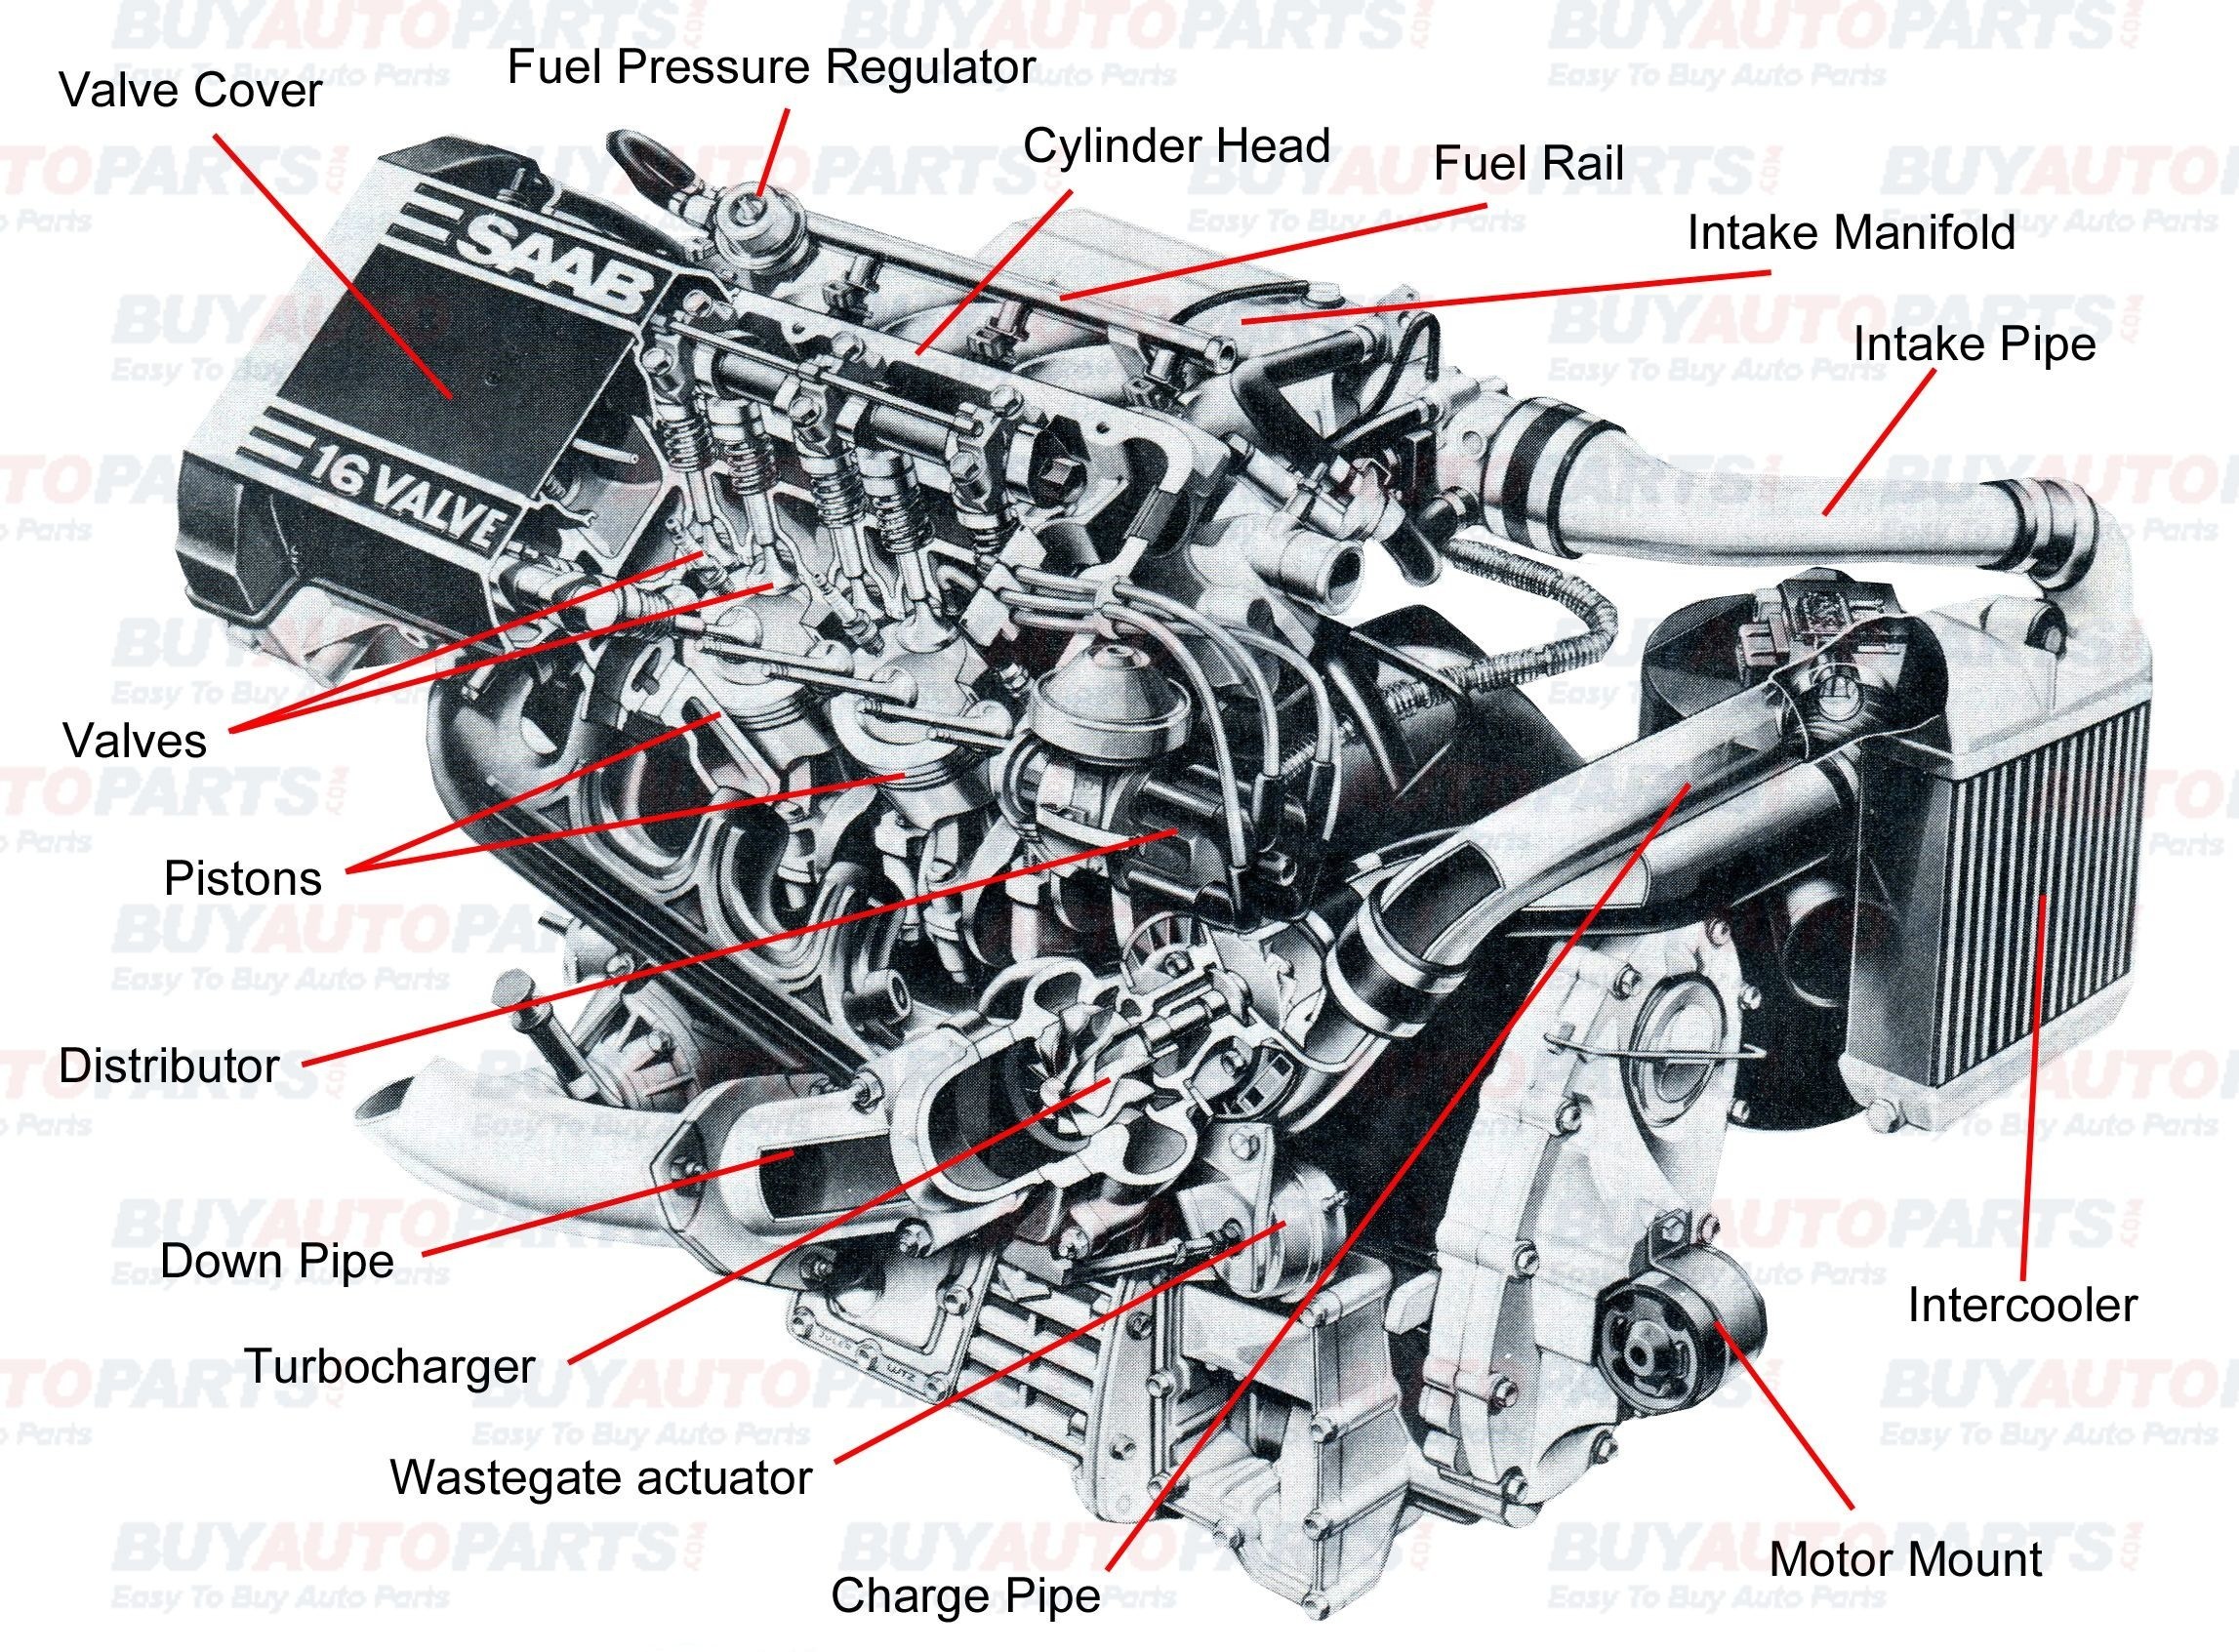 Car Parts and Diagram Car Diagram Unique Car Parts and Diagrams Insignia Se 2 0d – My Of Car Parts and Diagram